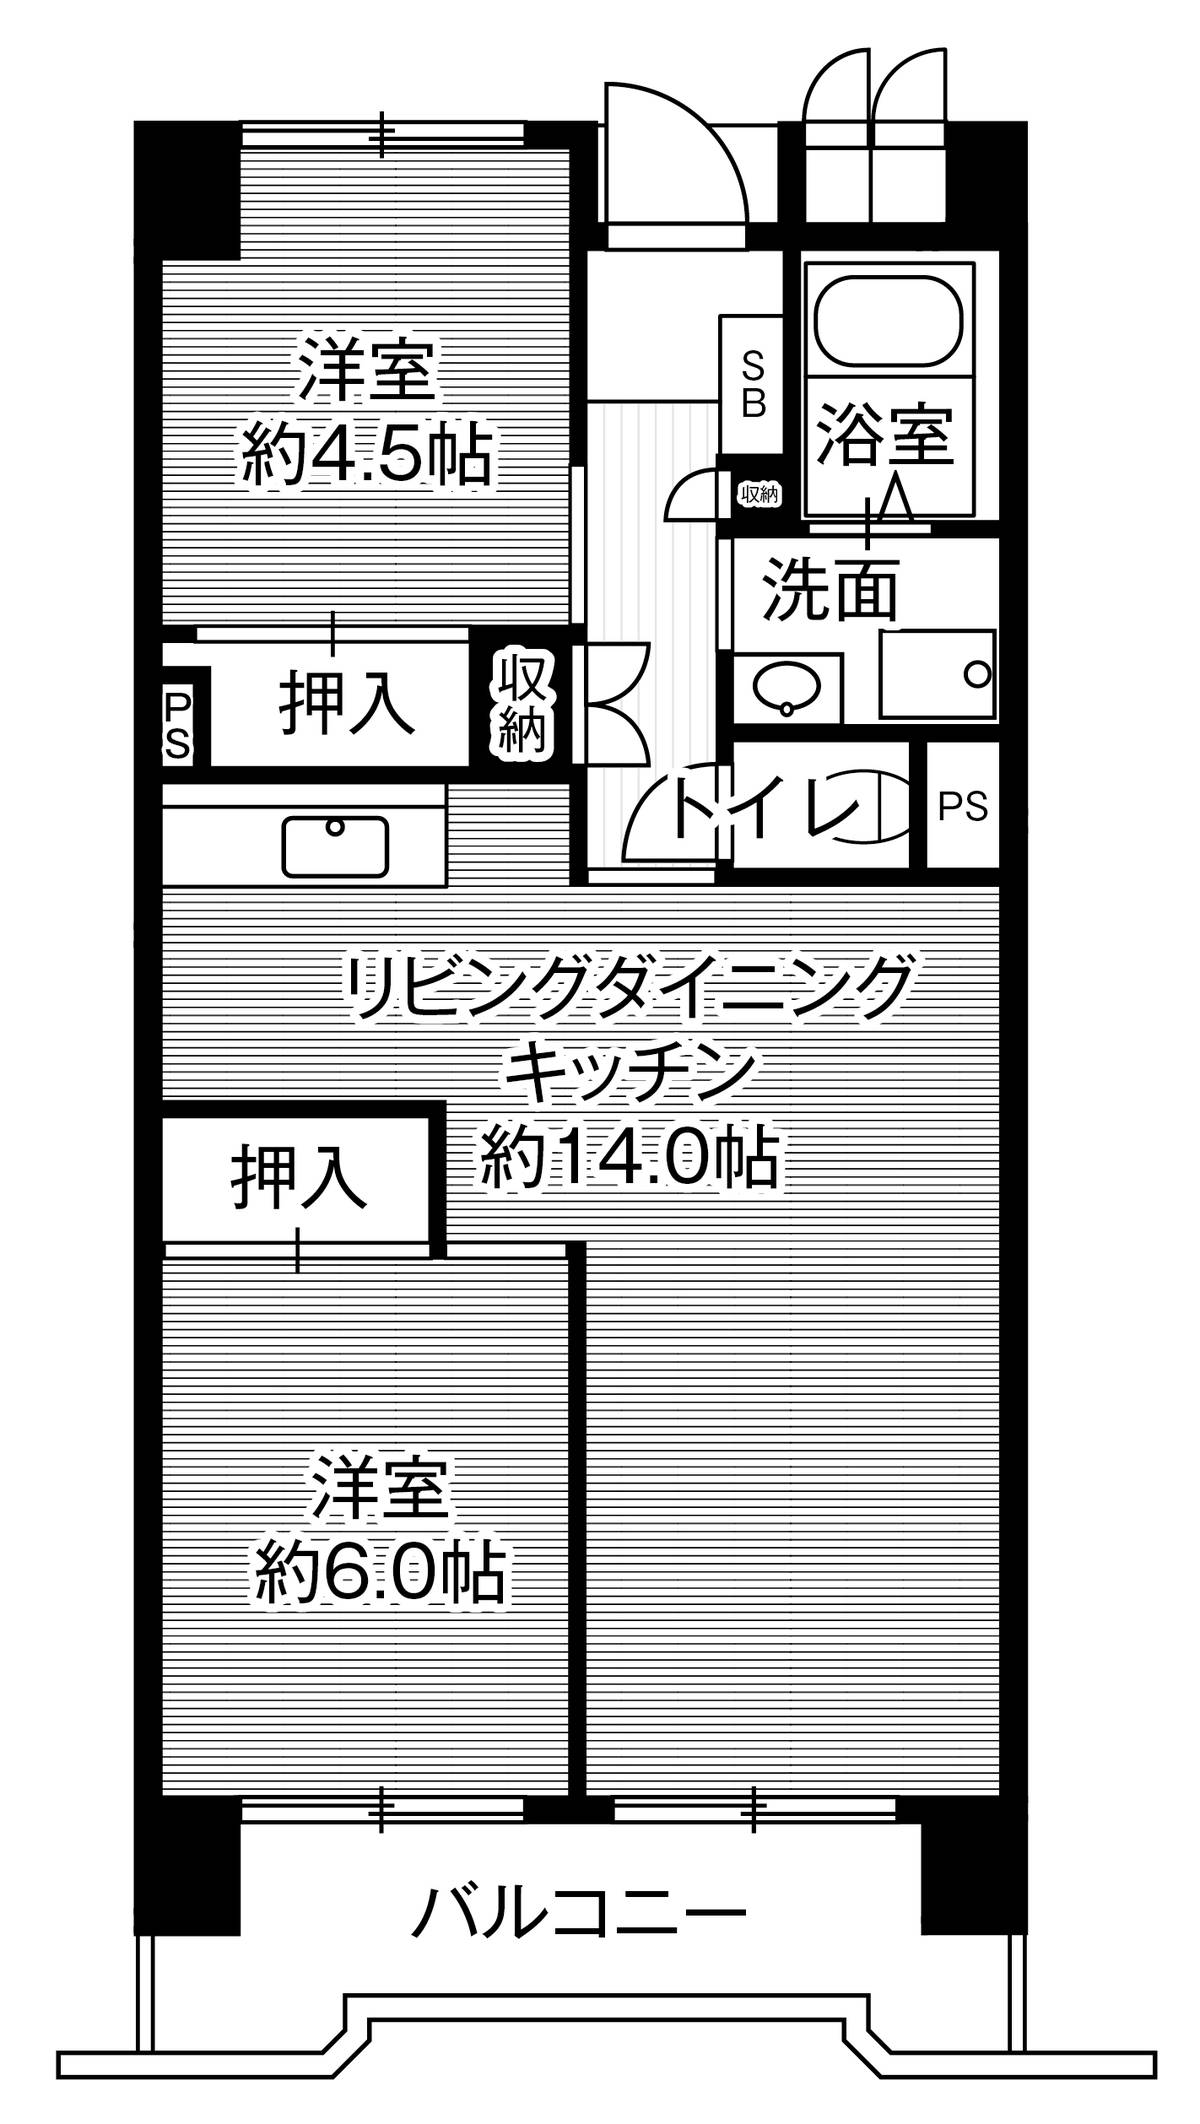 Planta 2LDK Village House Kasadera Tower em Minami-ku